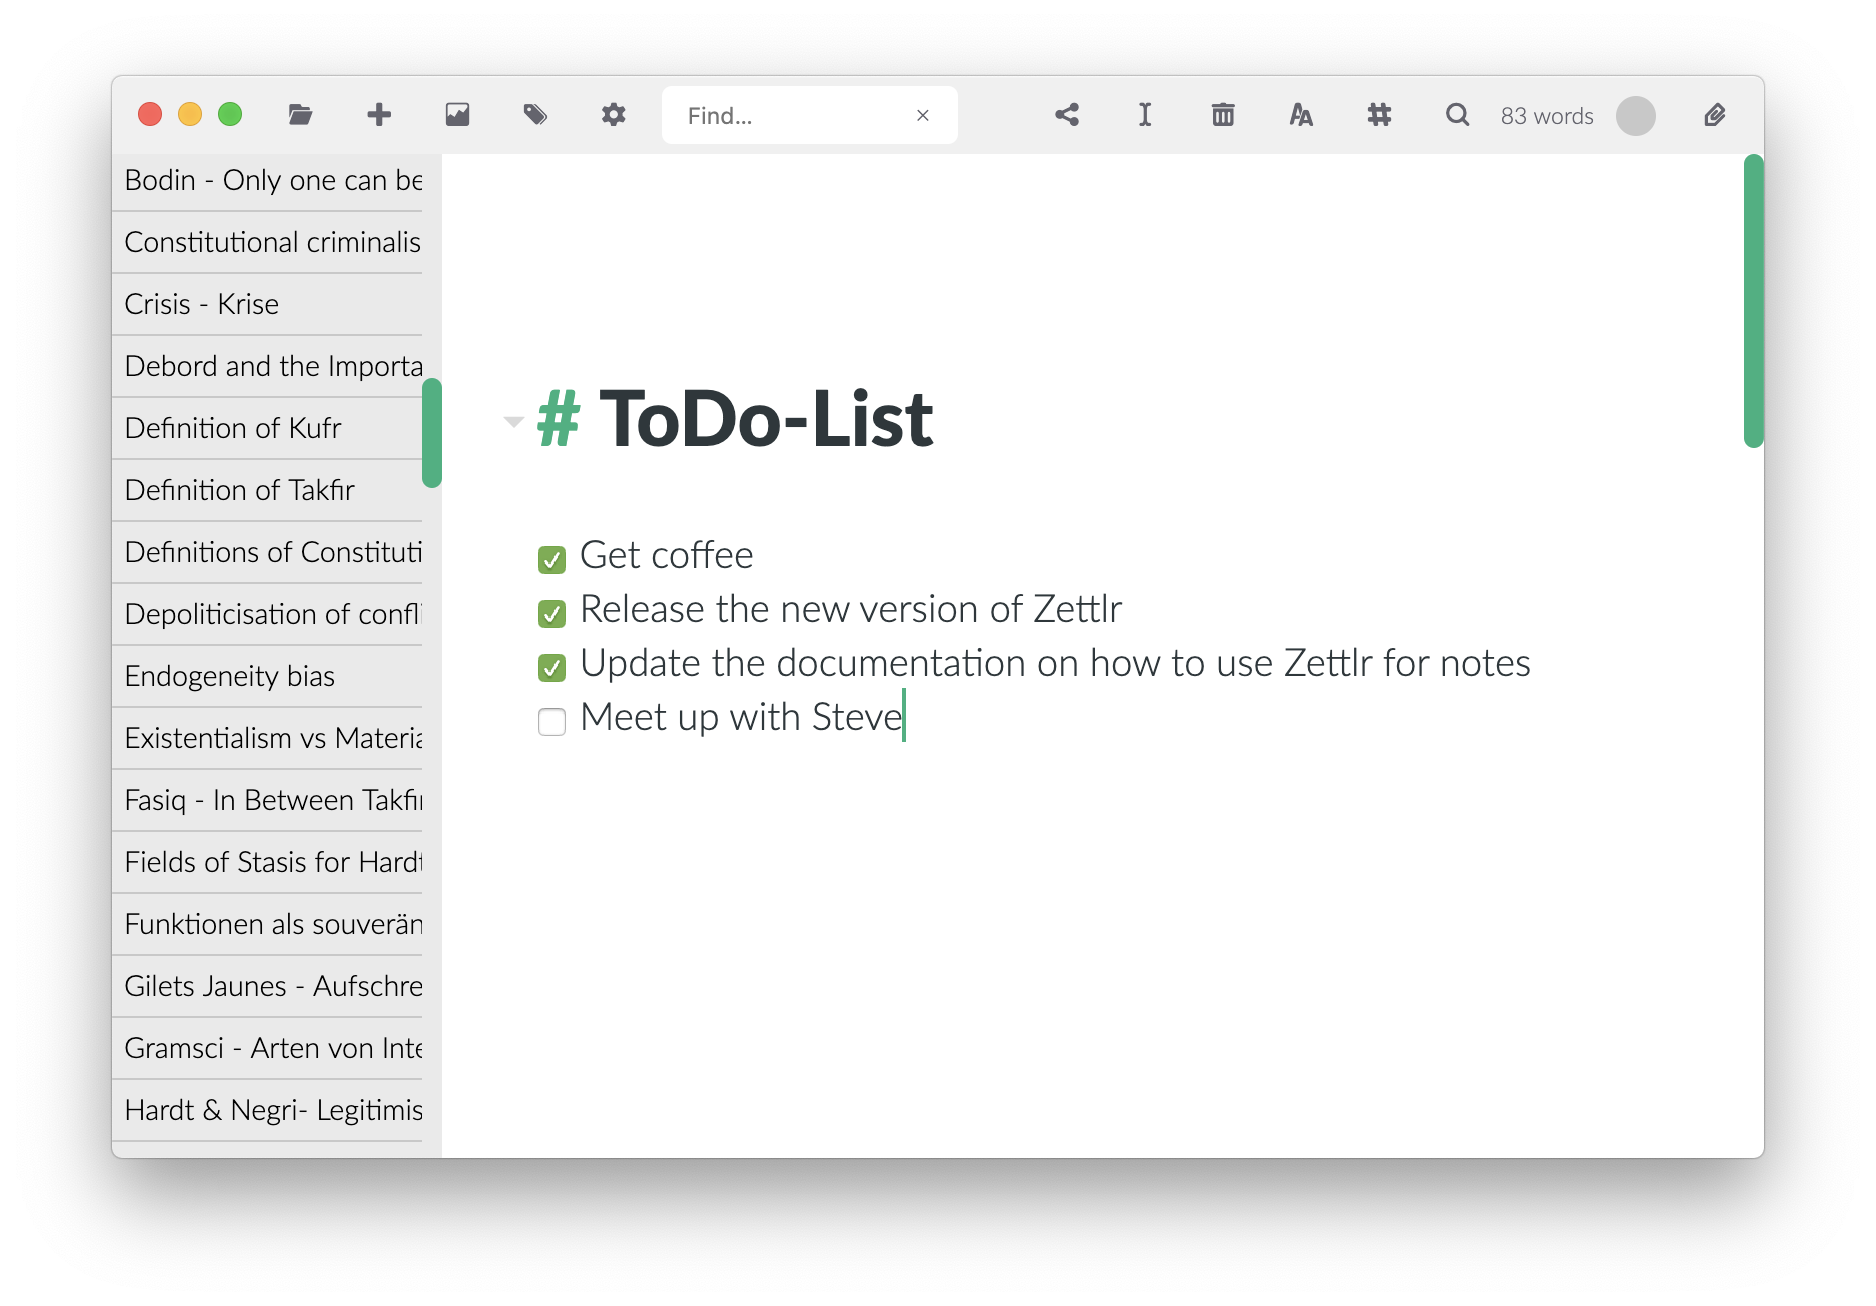 Zettlr as a Note-Taking app